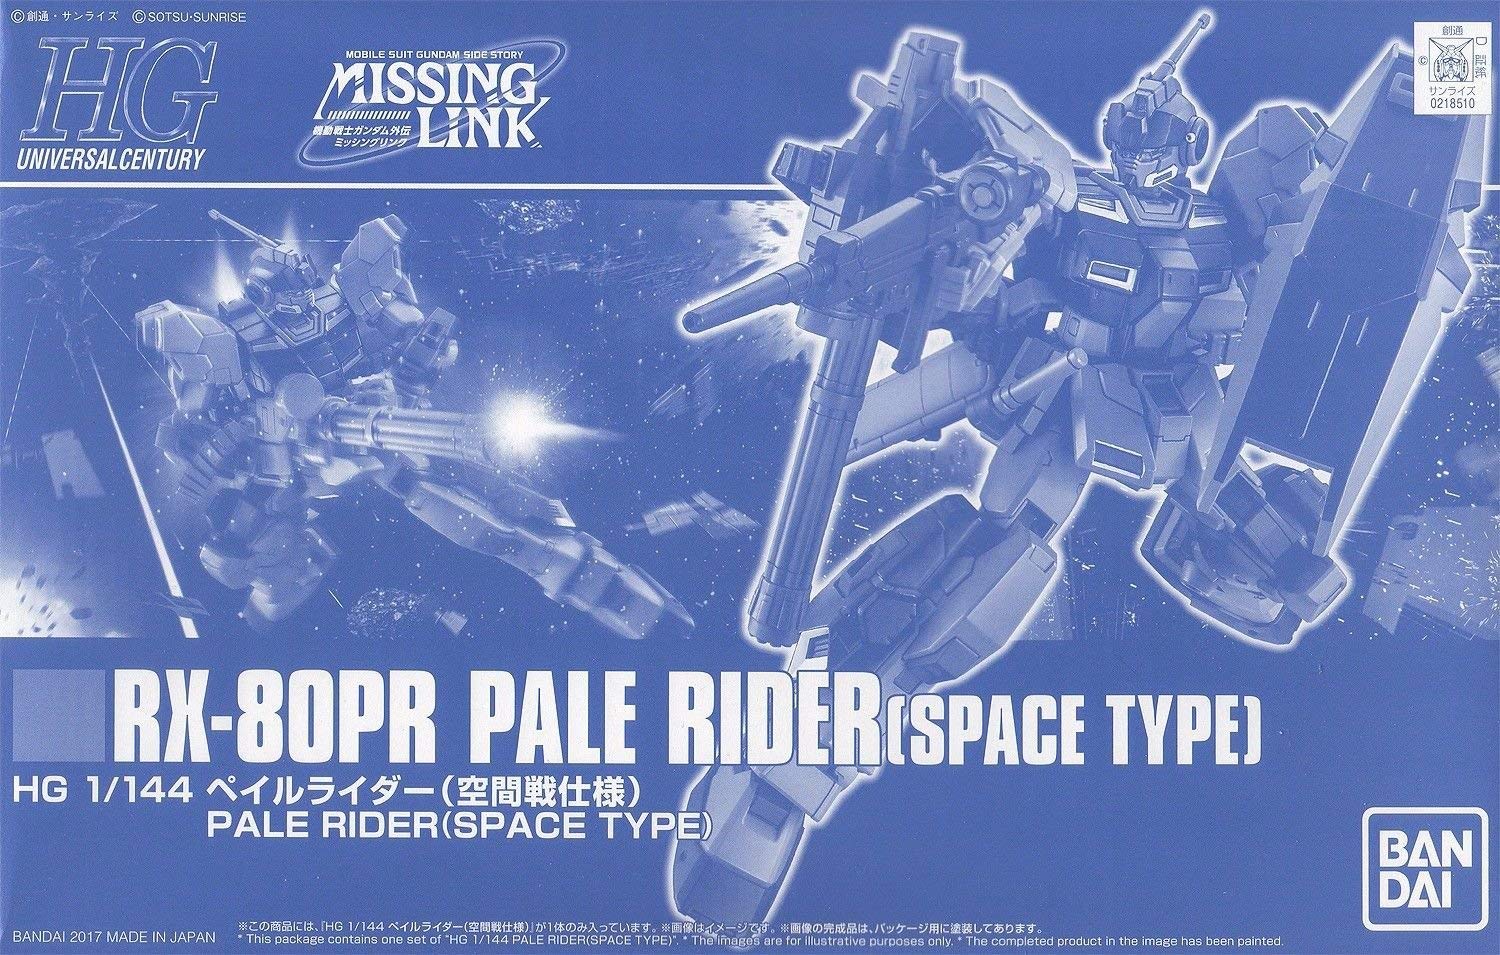 Gundam 1/144 Gundam Mobile Suit Gundam Side Story Mising Link RX-80PR Pale Rider Space Type Model Kit Exclusive